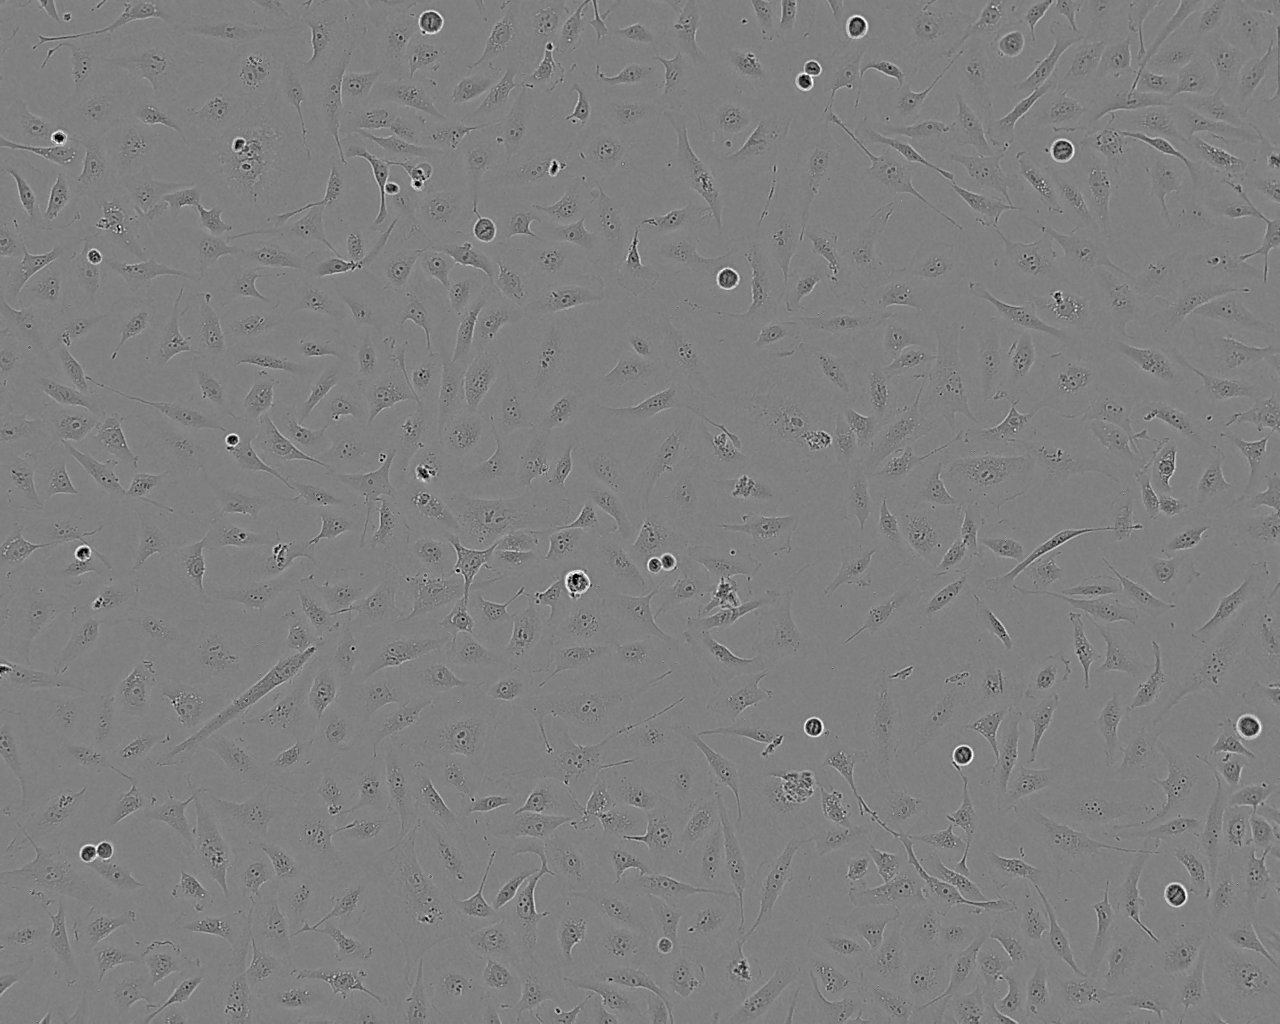 SNU-719 epithelioid cells人胃癌细胞系,SNU-719 epithelioid cells